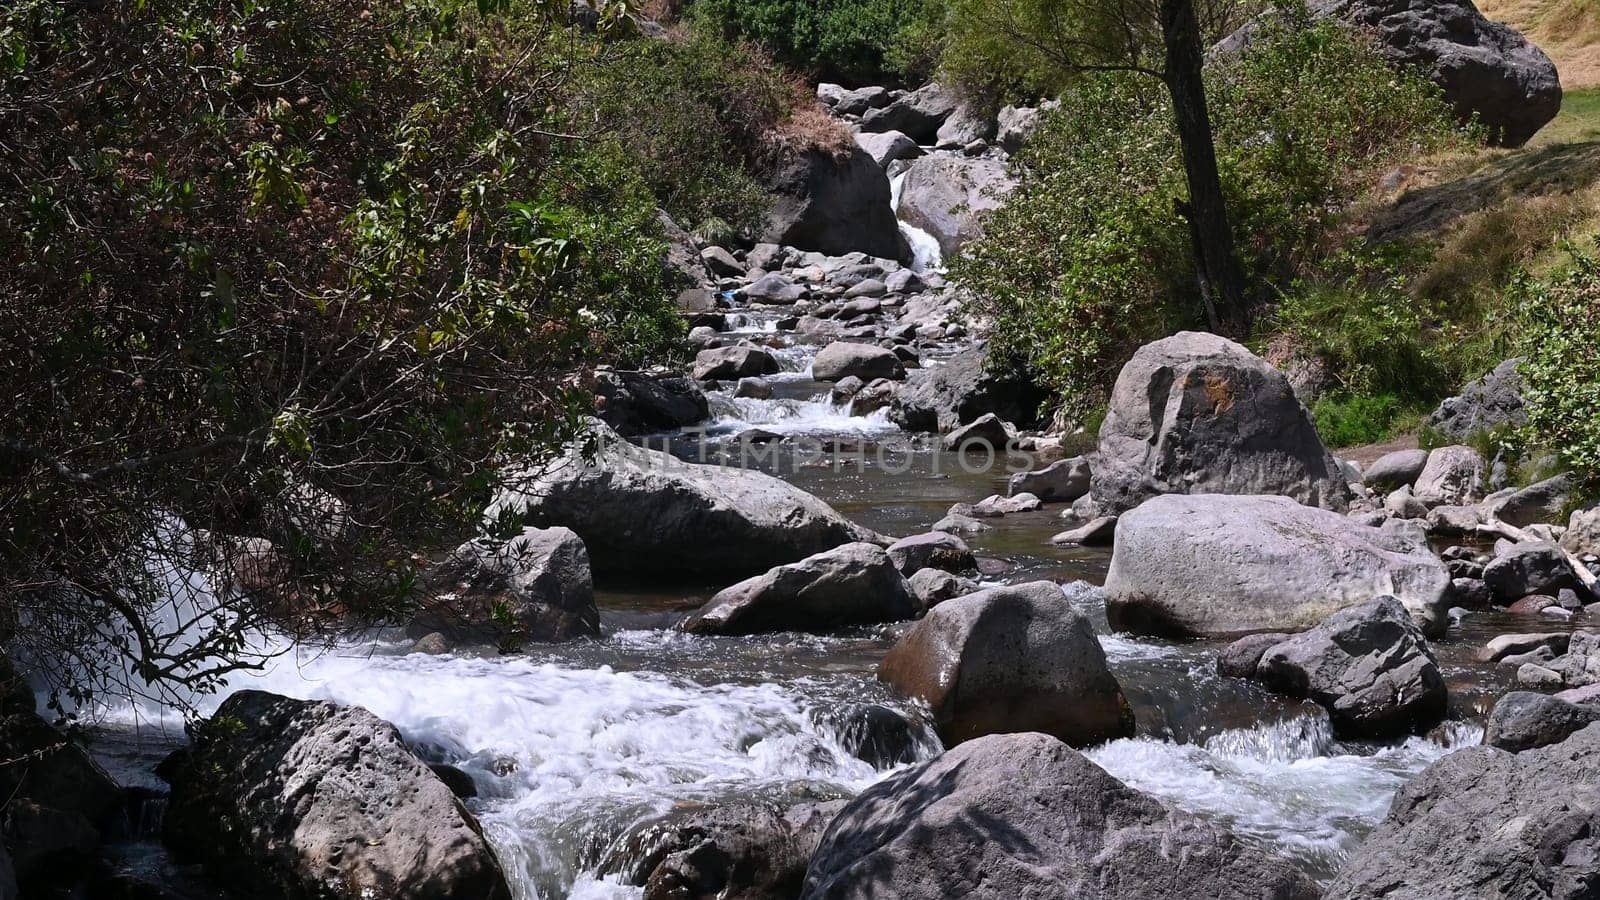 Clear stream running through stone rocks. Abundant river flowing on stone bottom. Wild mountain river water splashing in summer day by Peruphotoart